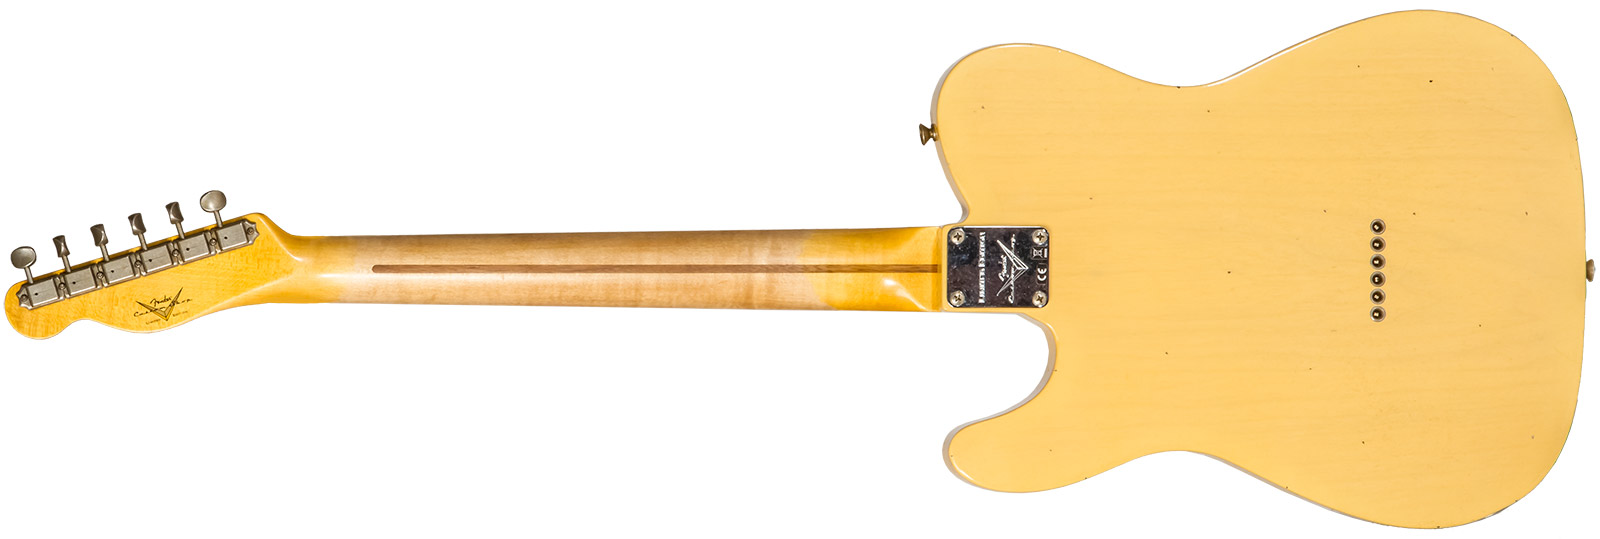 Fender Custom Shop Tele 1953 2s Ht Mn #r128606 - Journeyman Relic Aged Nocaster Blonde - Guitarra eléctrica con forma de tel - Variation 1